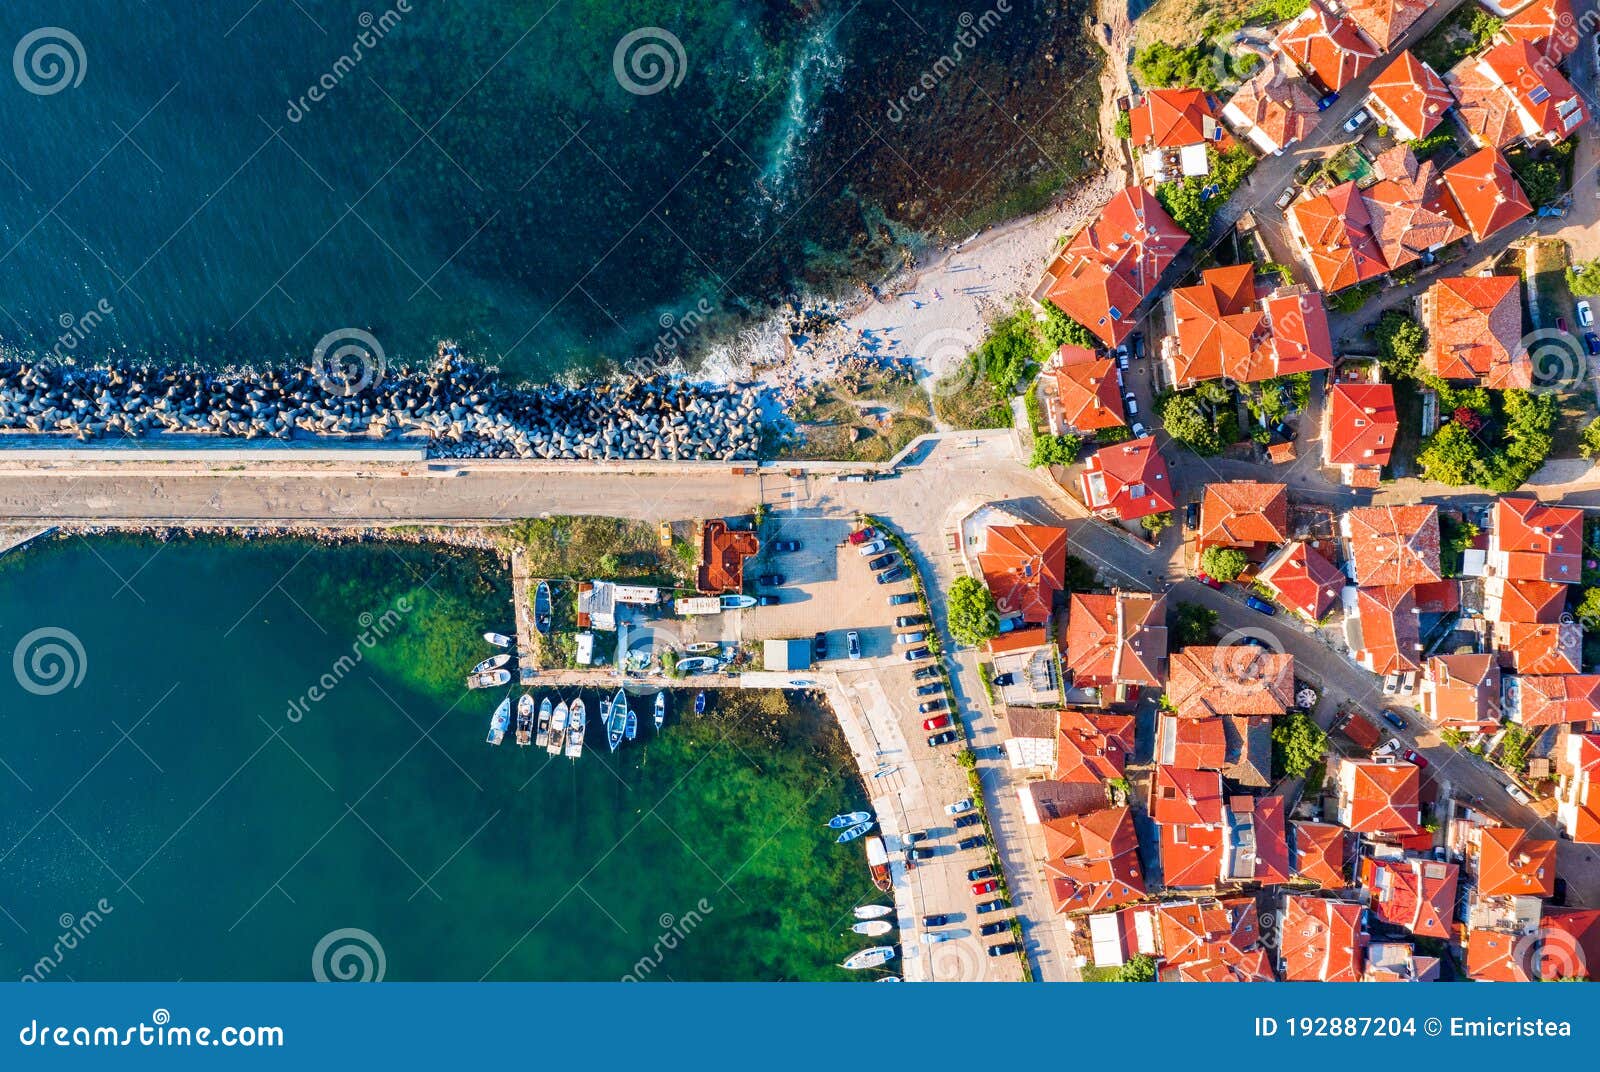 sozopol, bulgaria - aerial harbor view of downtown